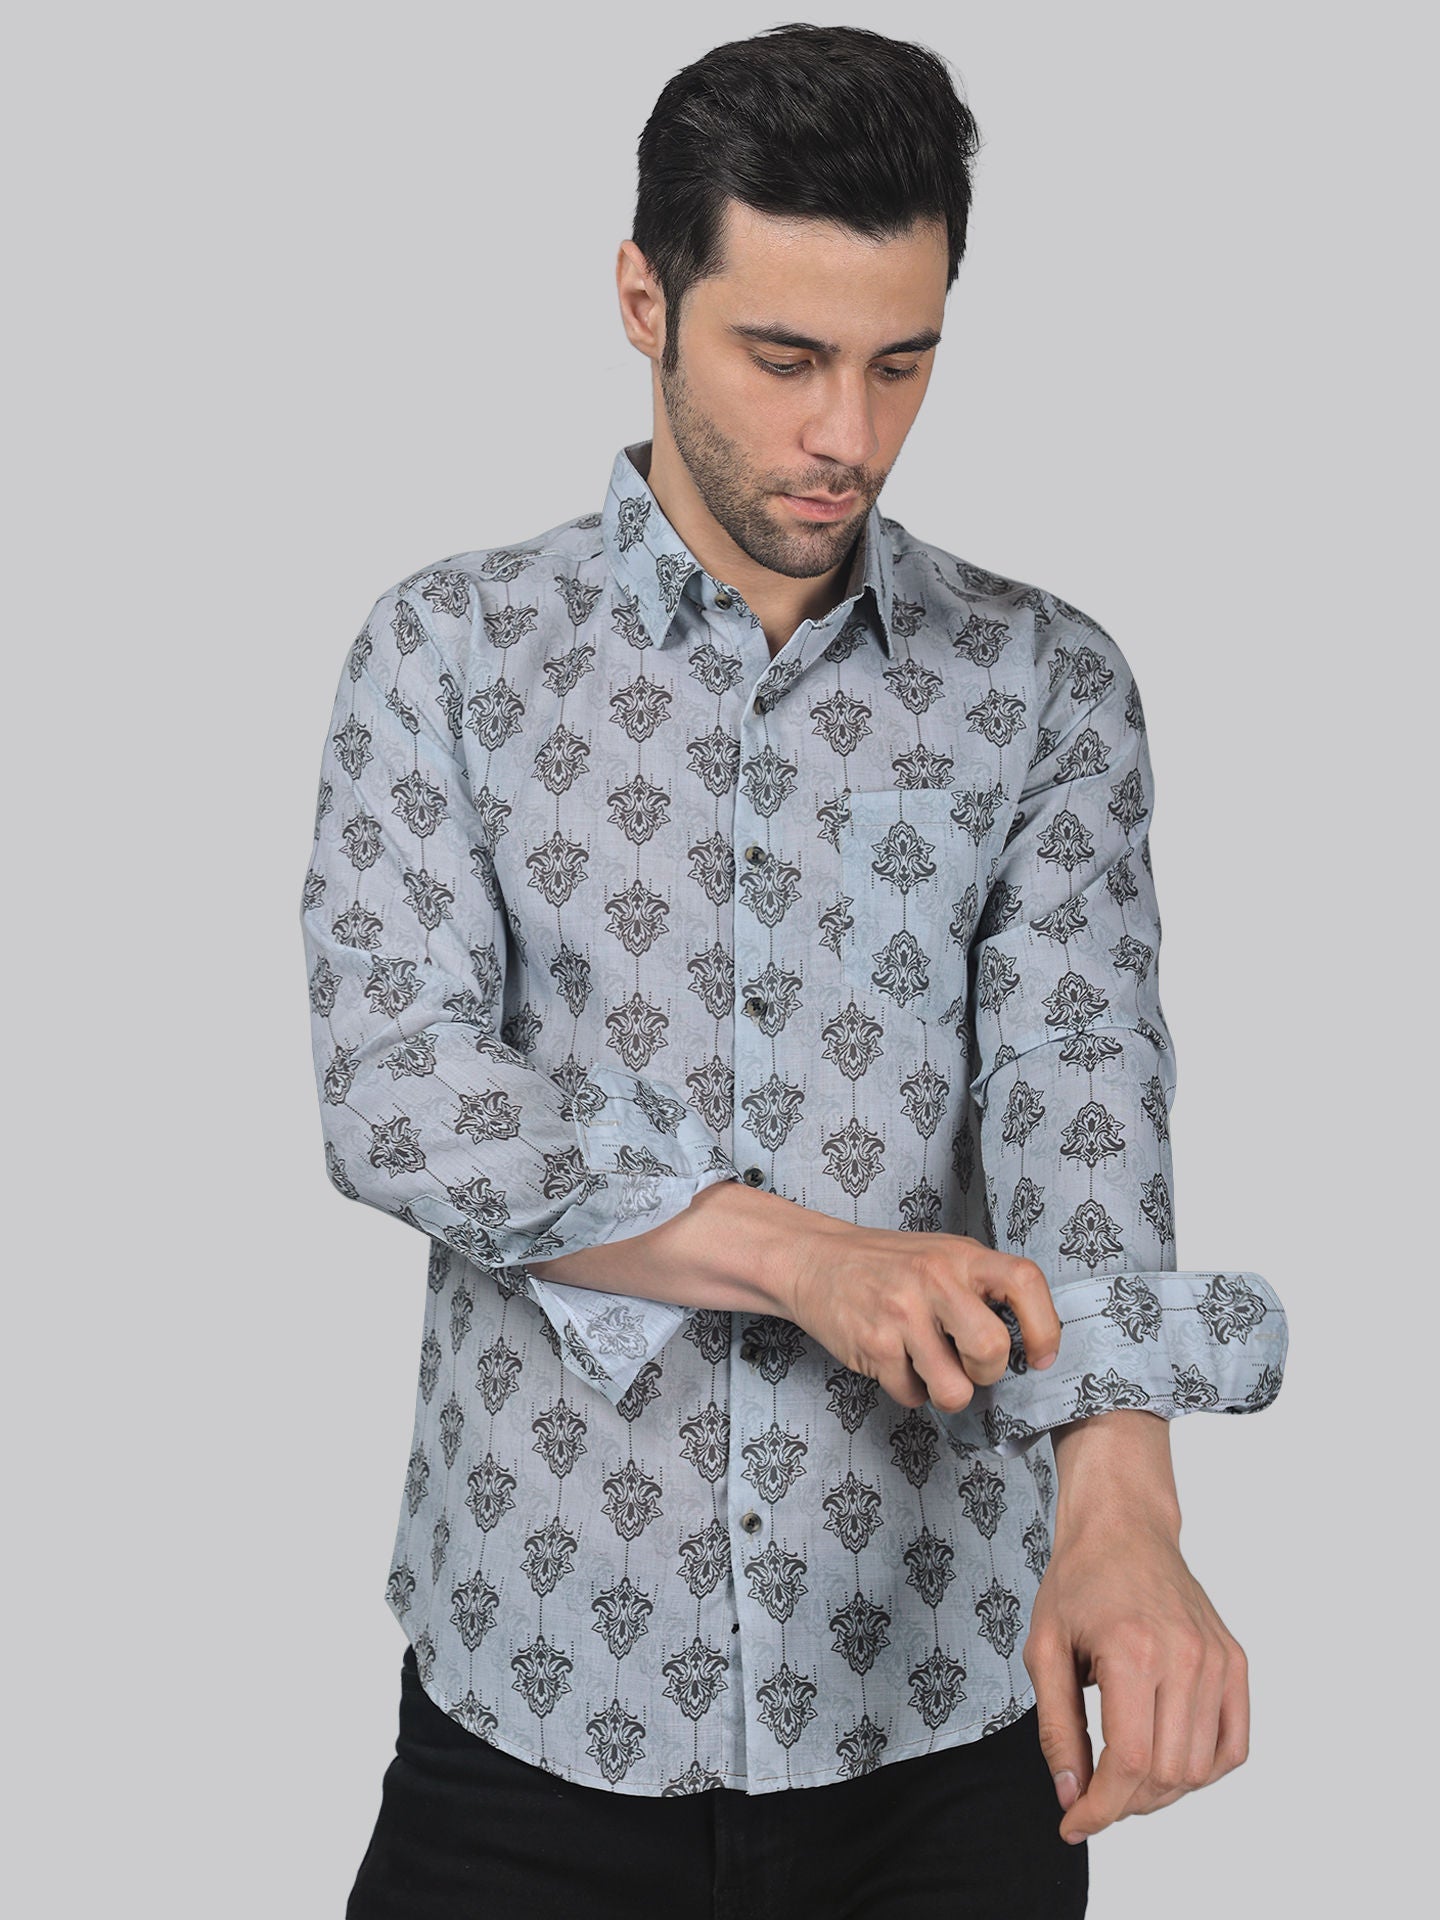 Flamingo Frenzy Men's Printed Full Sleeve Casual Linen Shirt - TryBuy® USA🇺🇸